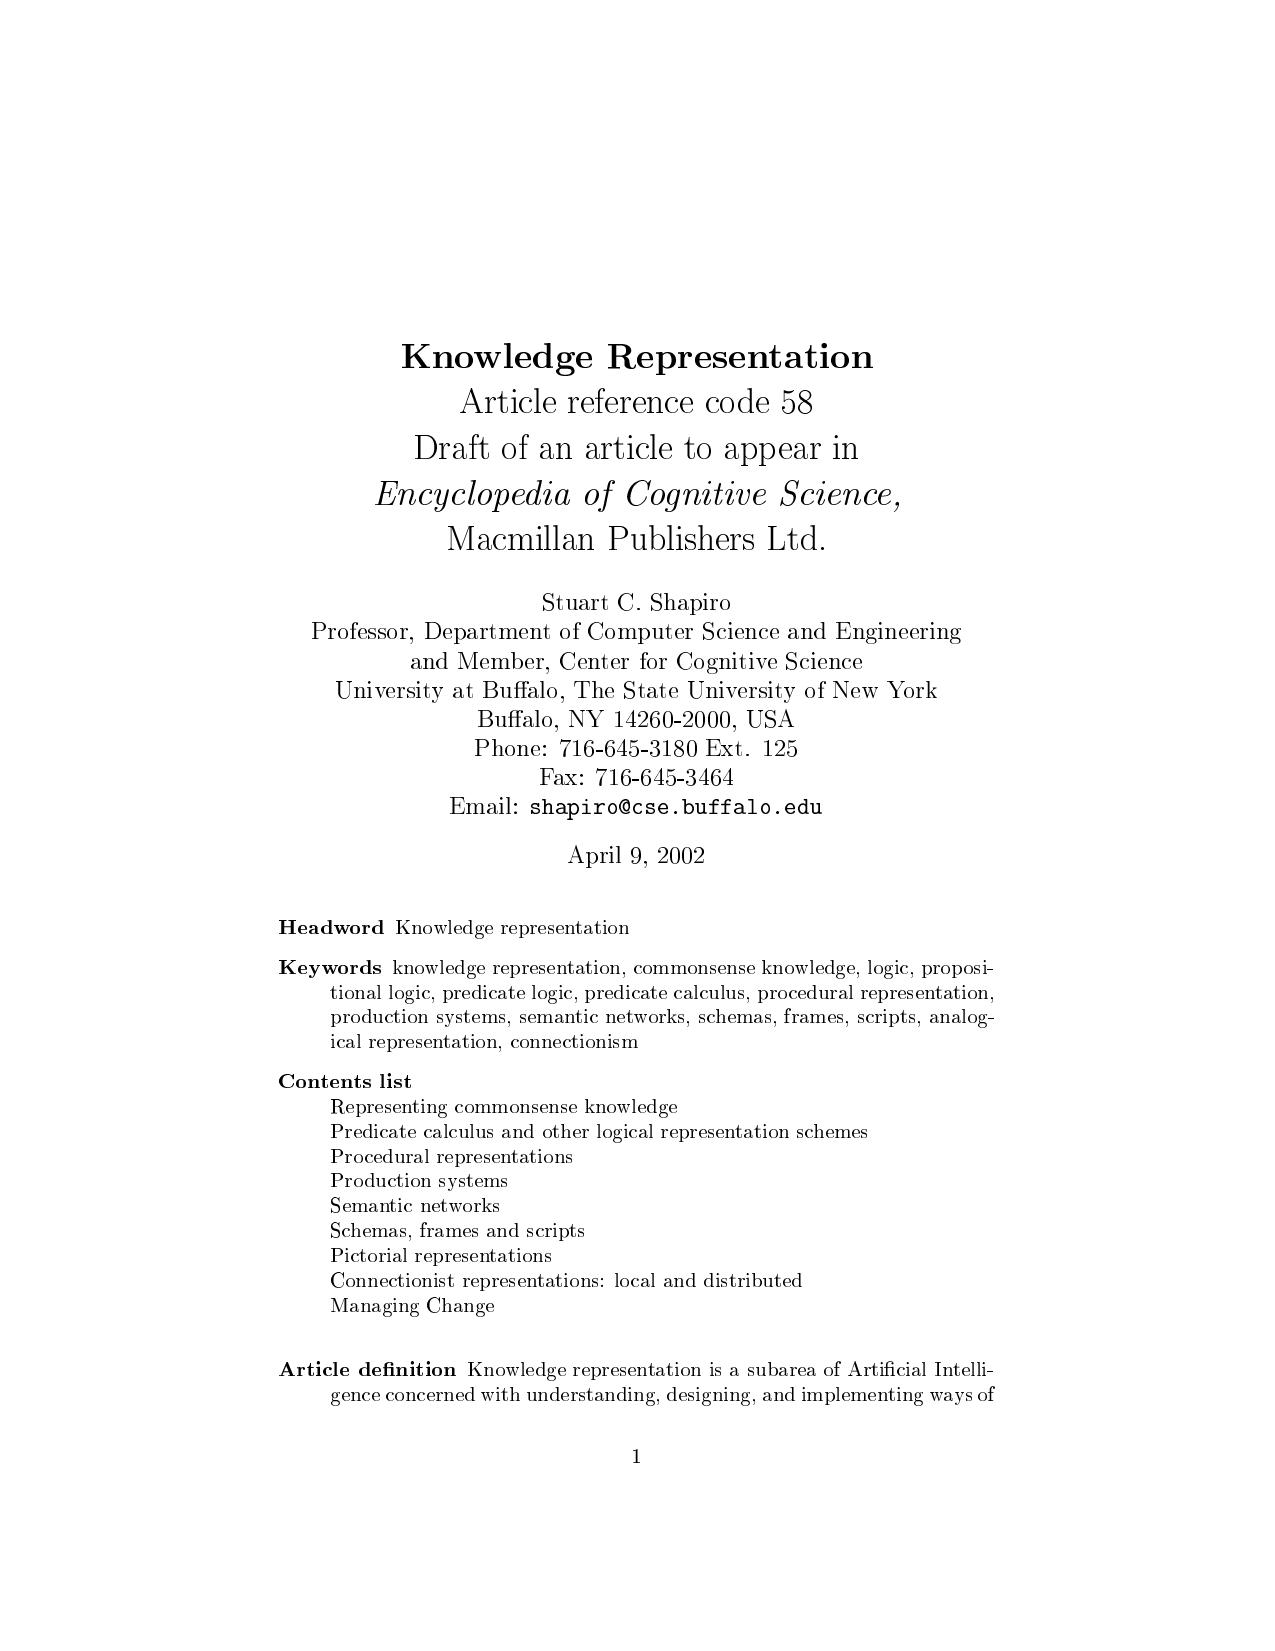 Knowledge Representation - Draft